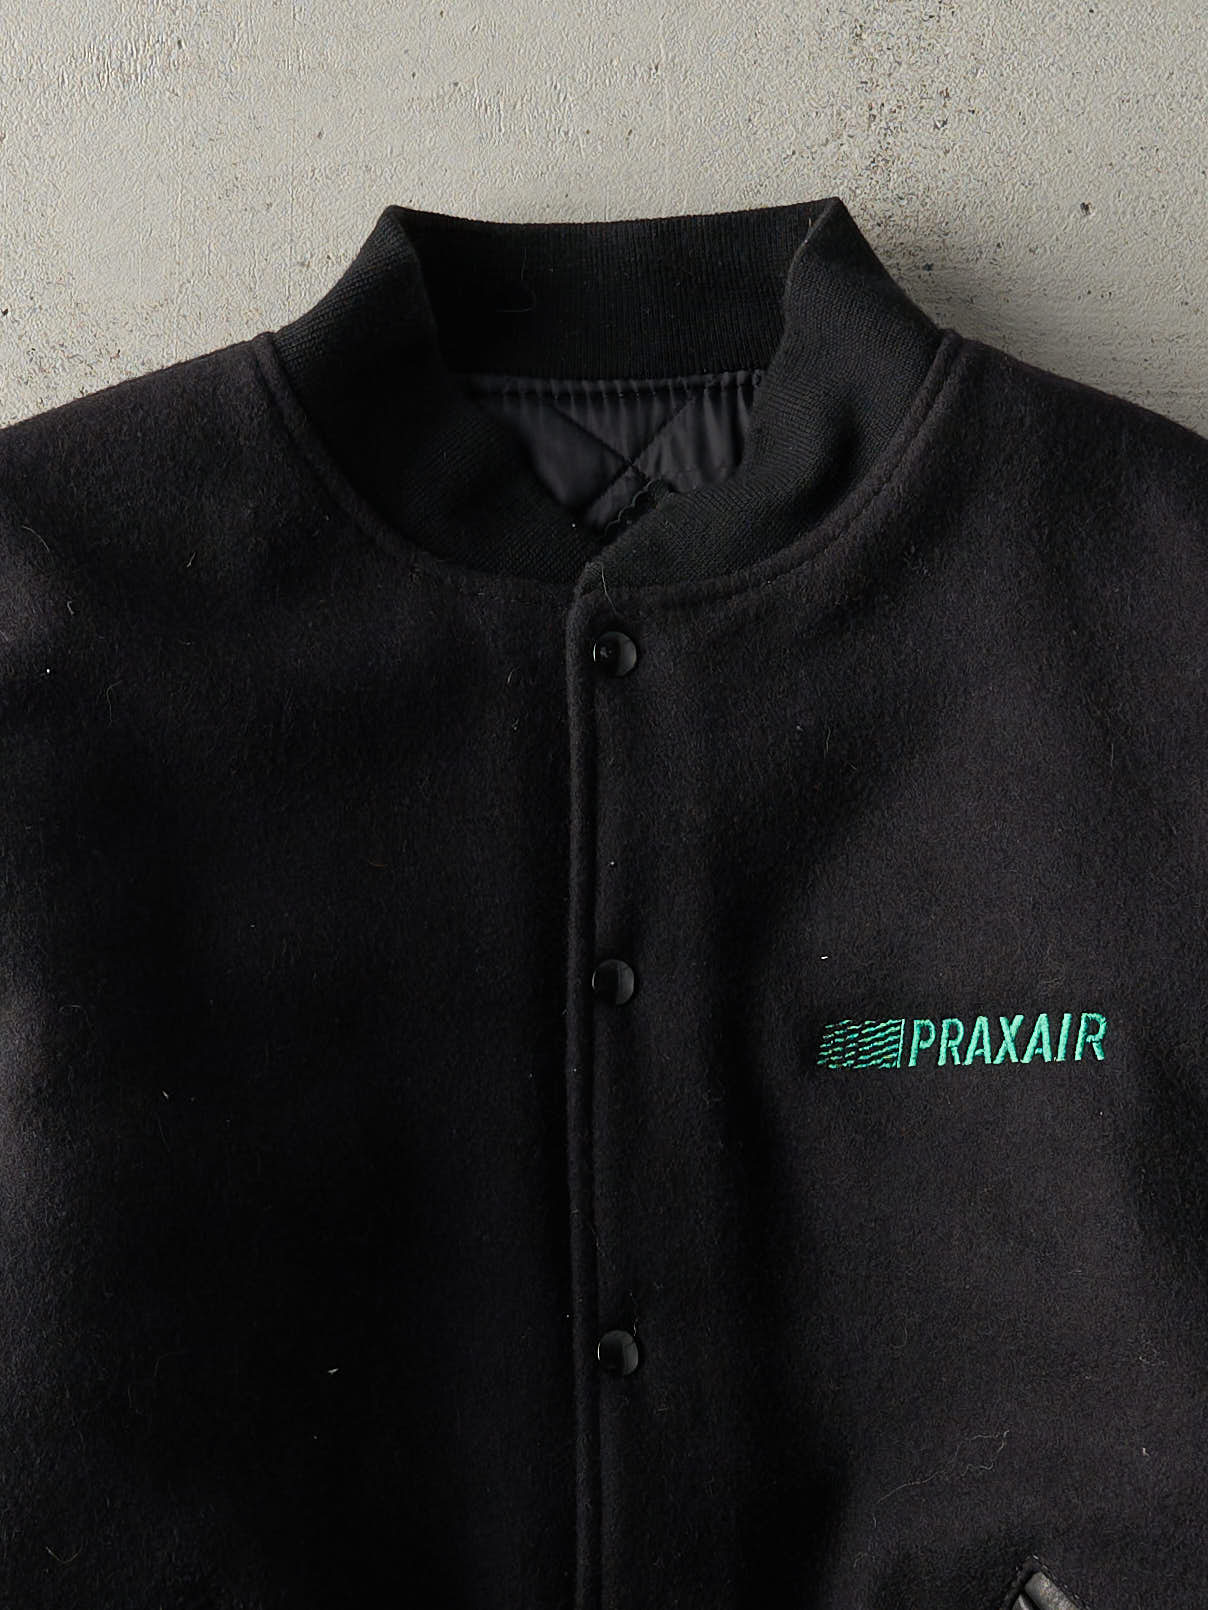 Vintage 90s Black Embroidered Praxair Varsity Jacket (XXL)